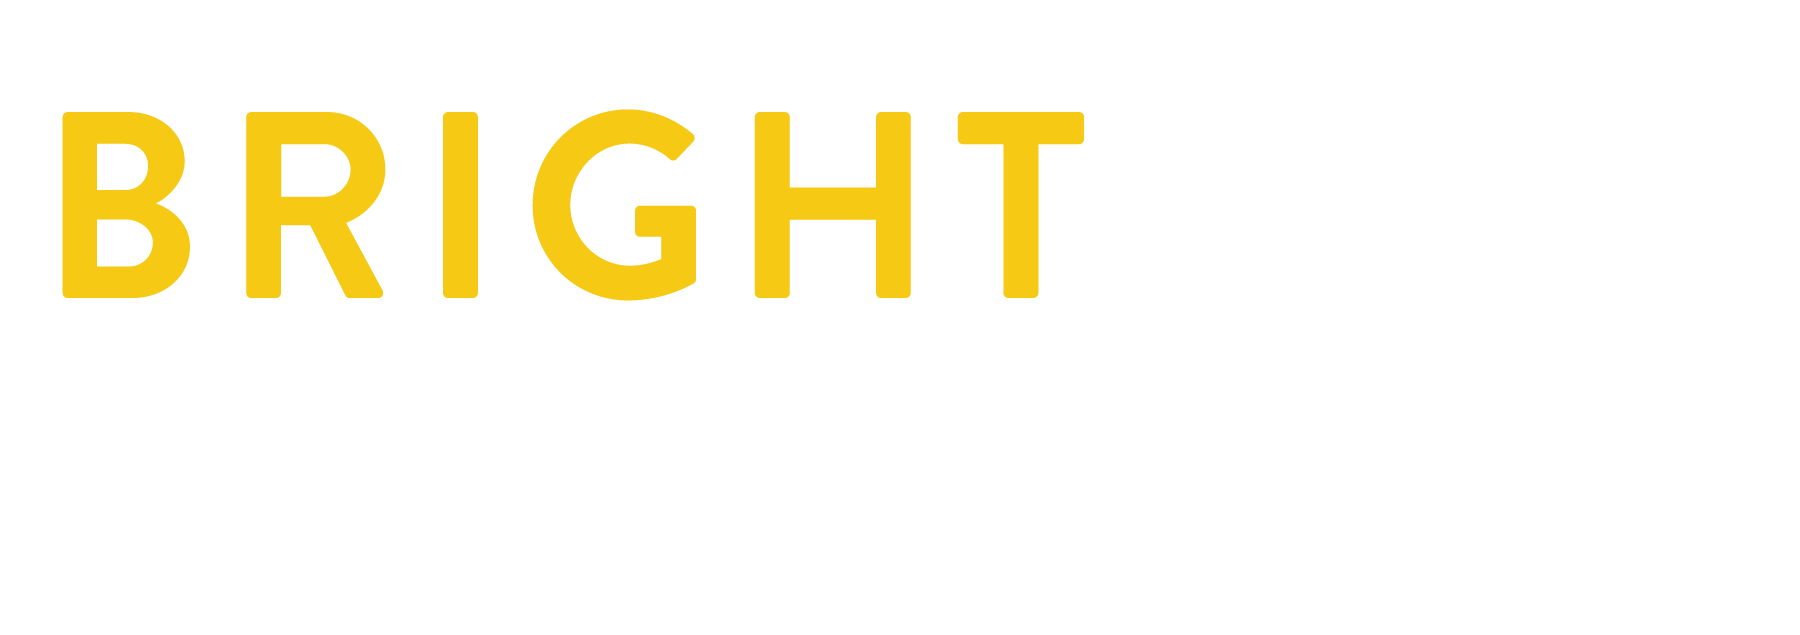 Brightside Clinic